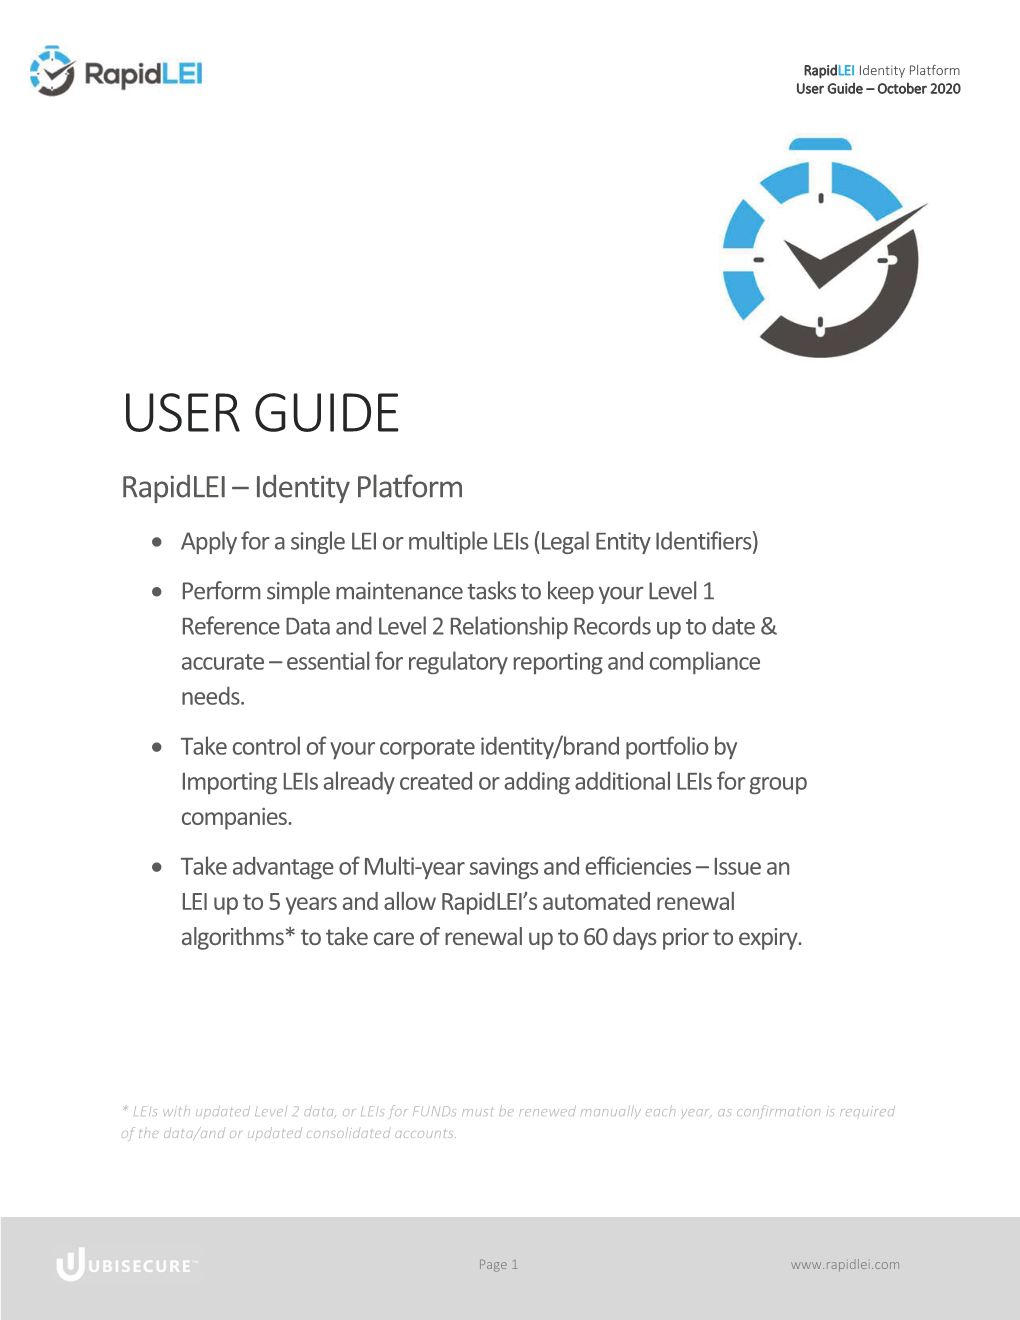 User Guide – October 2020